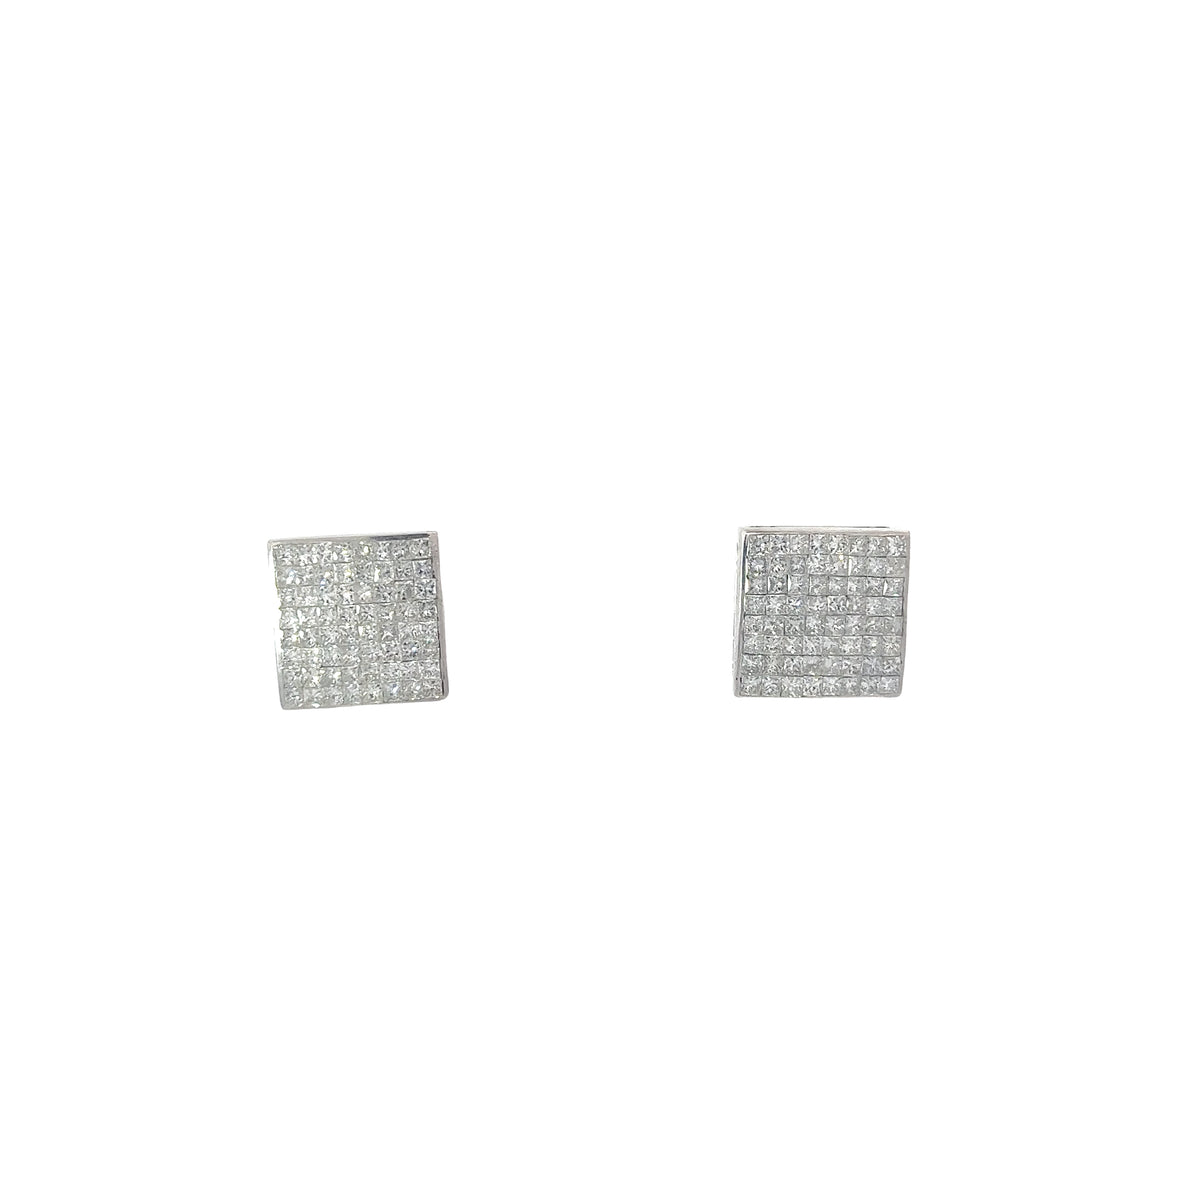 Mens 14k white gold Invisible set Diamond earrings